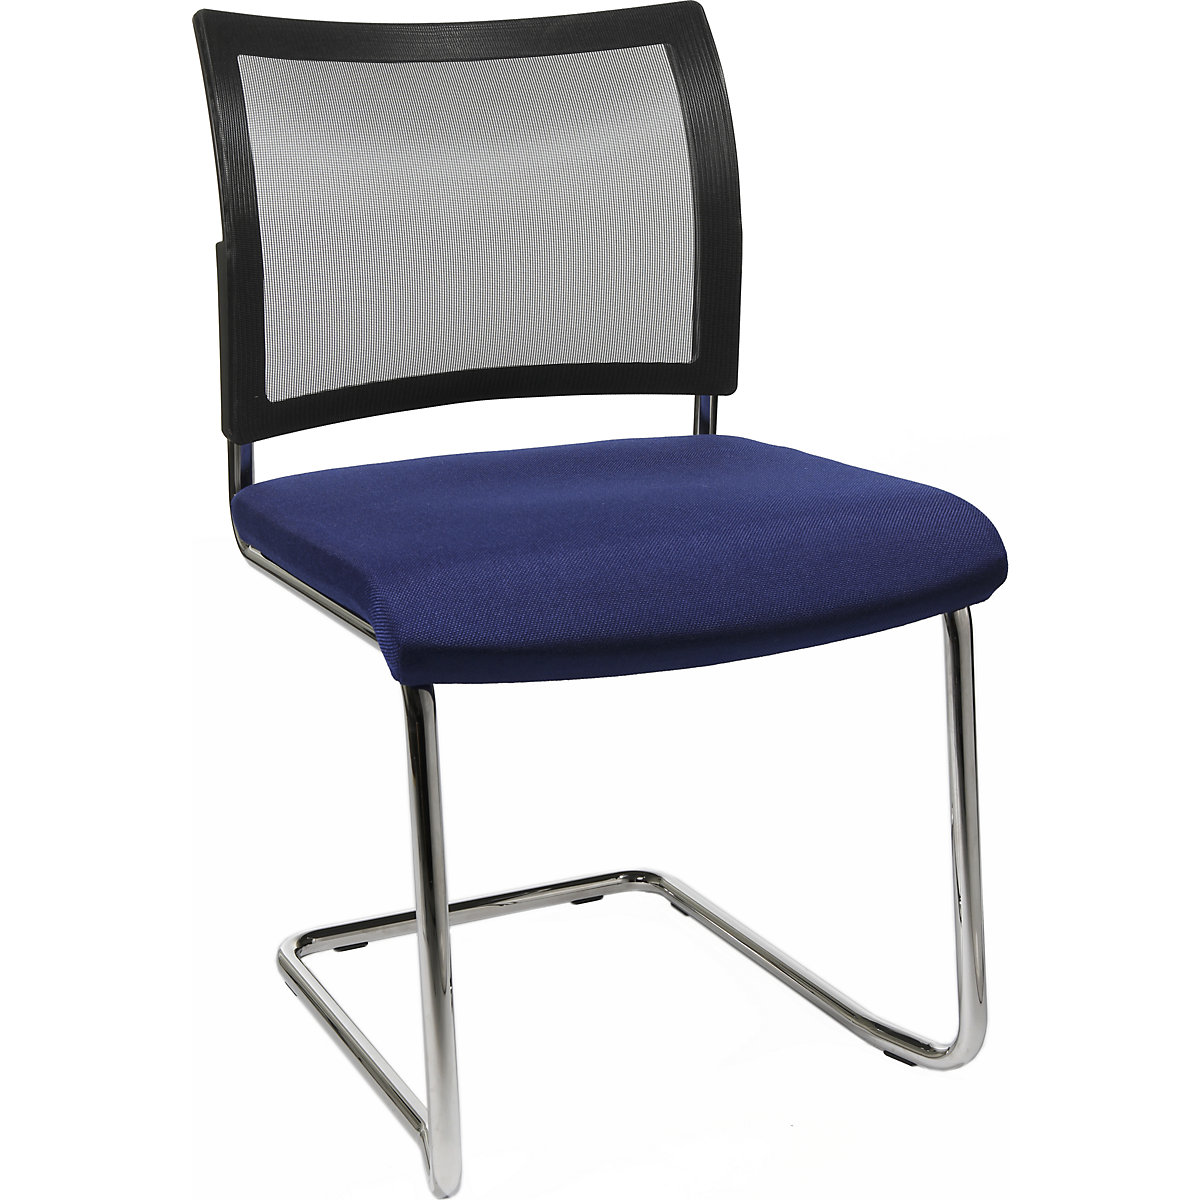 Silla para visitas, apilable – Topstar, silla oscilante, respaldo reticulado, UE 2 unid., azul-7